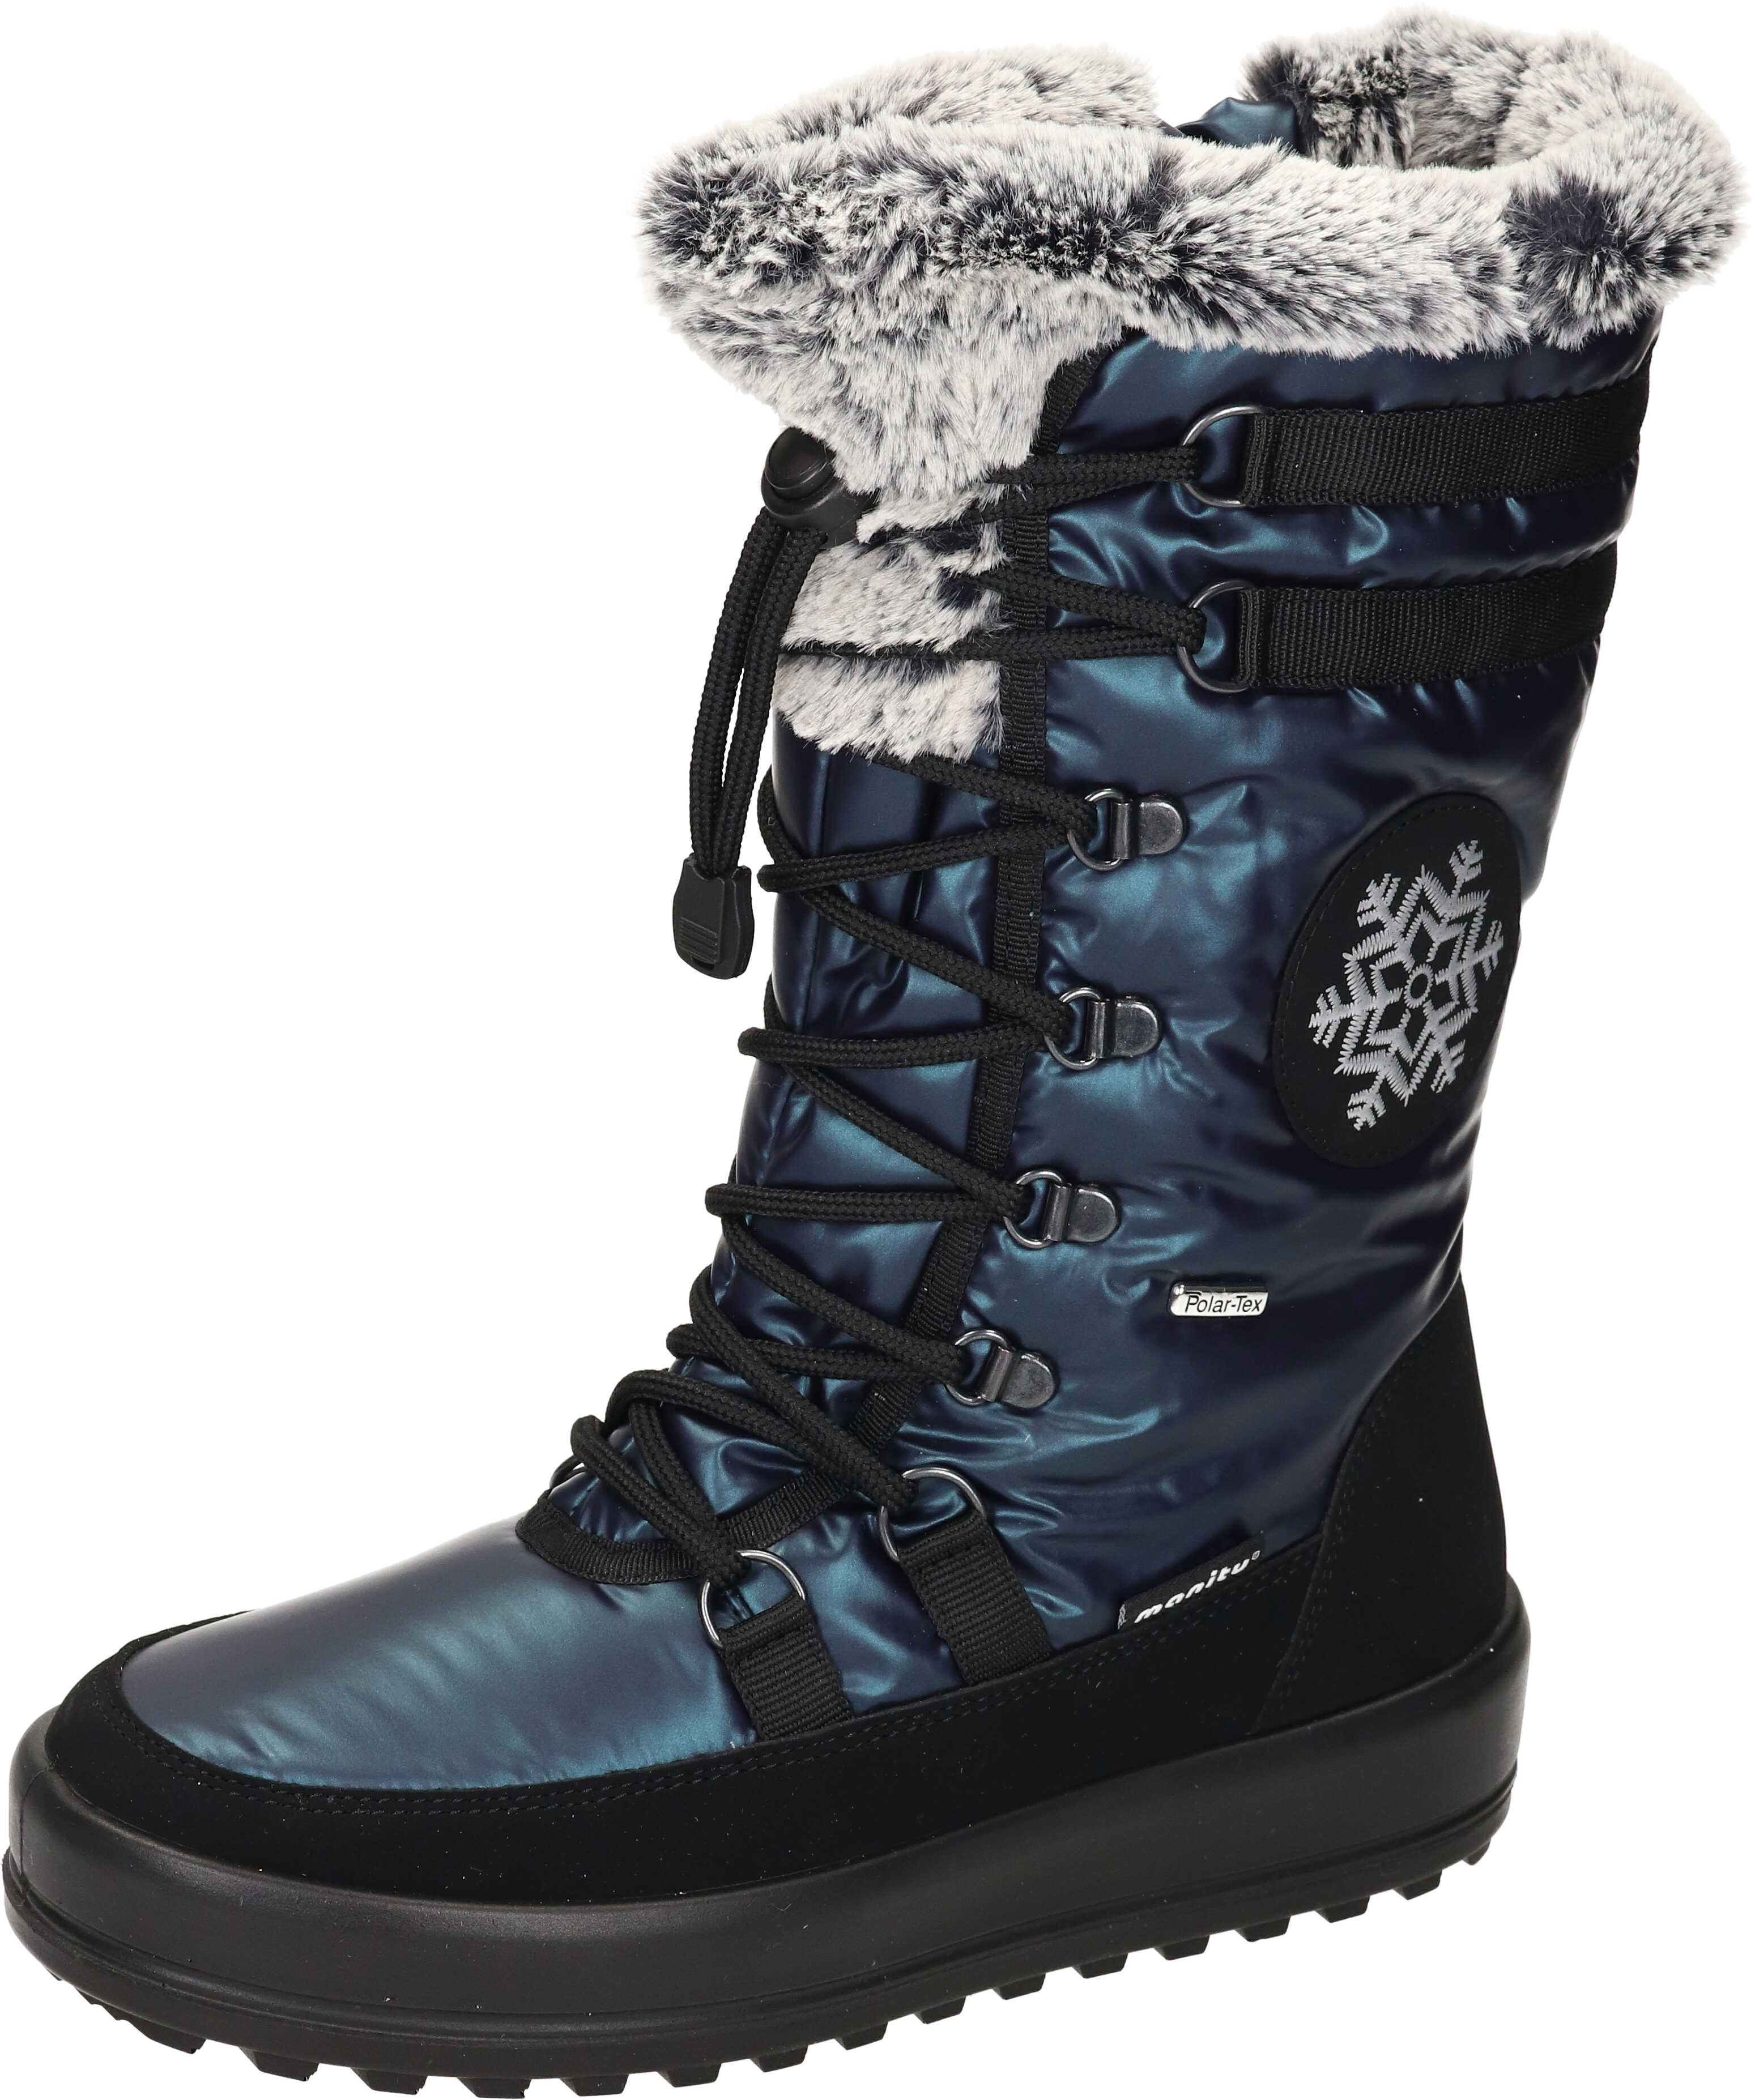 Polar-Tex Boots